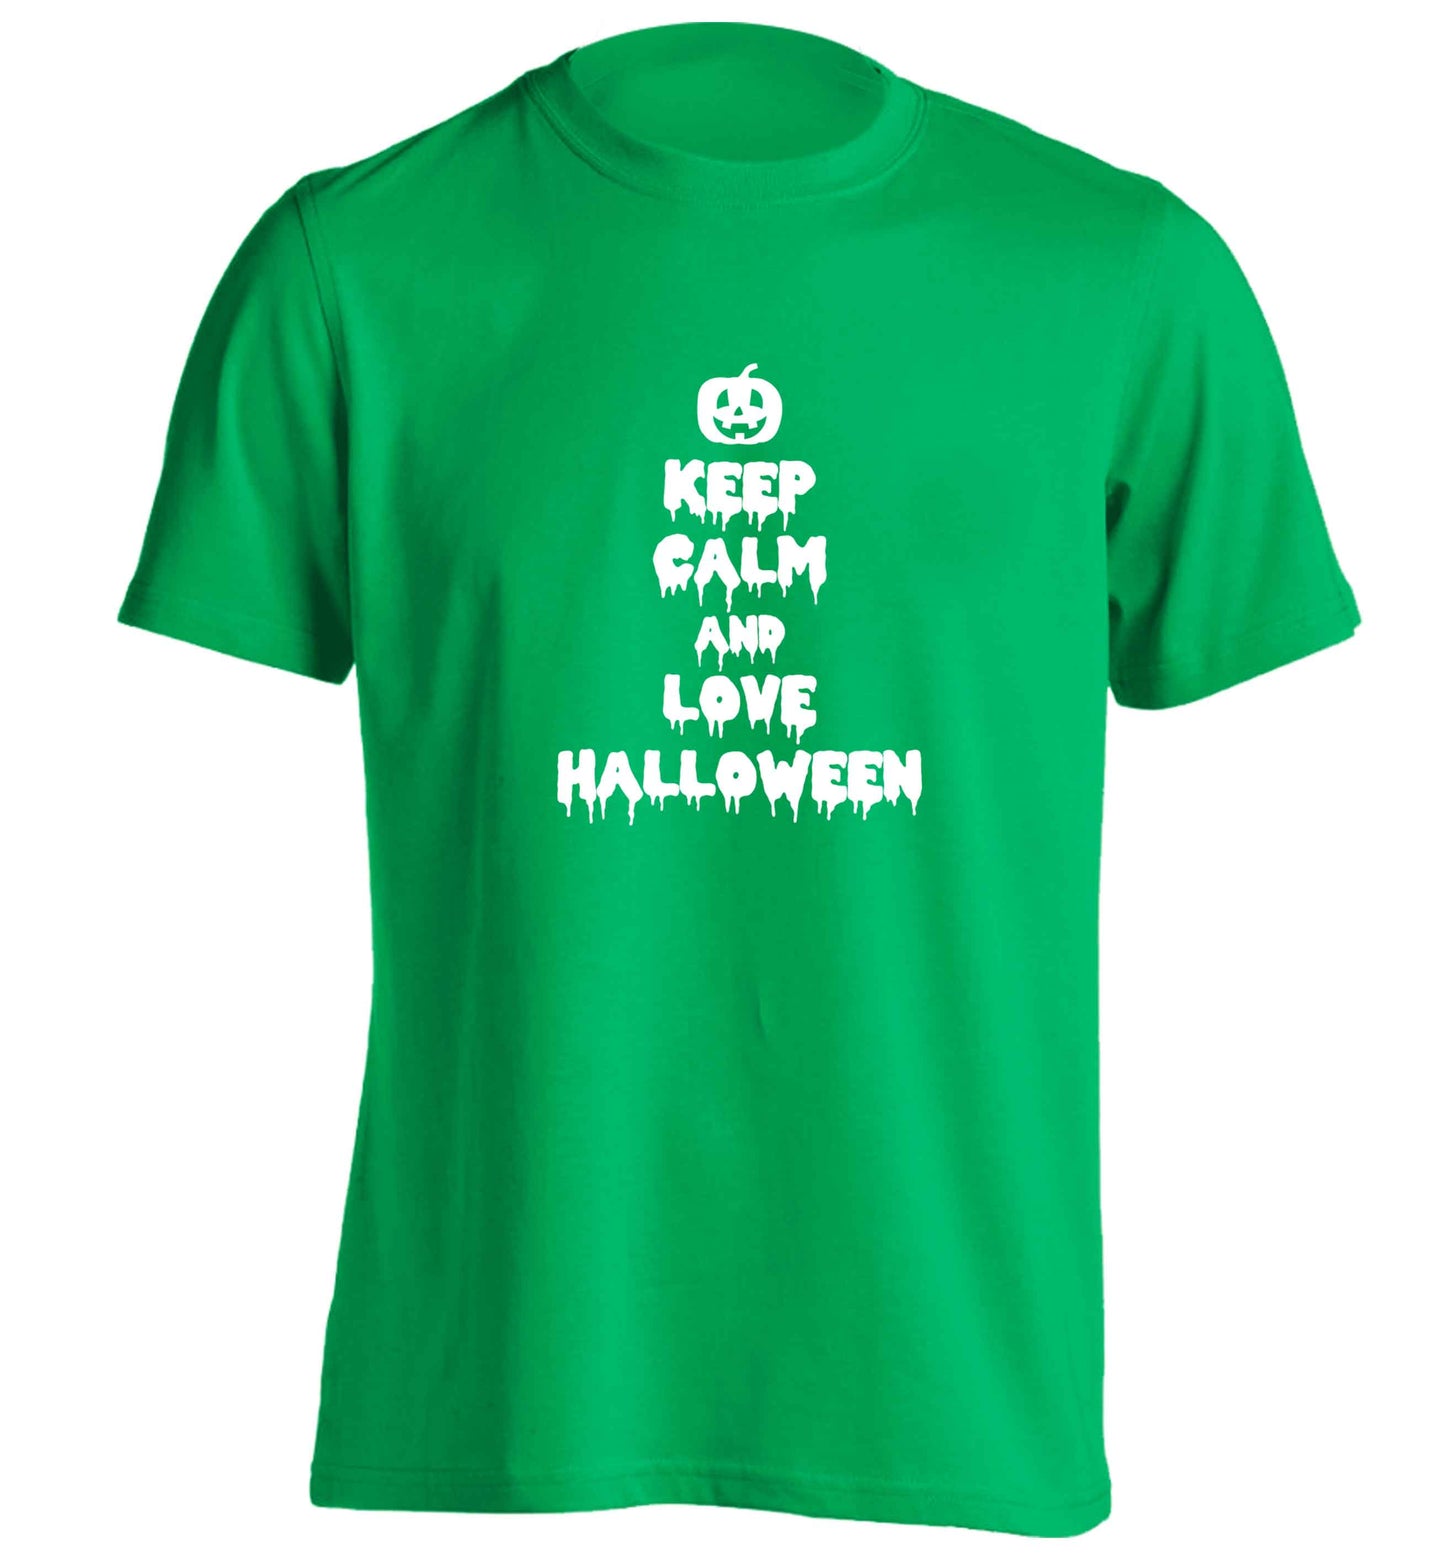 Keep calm and love halloween adults unisex green Tshirt 2XL